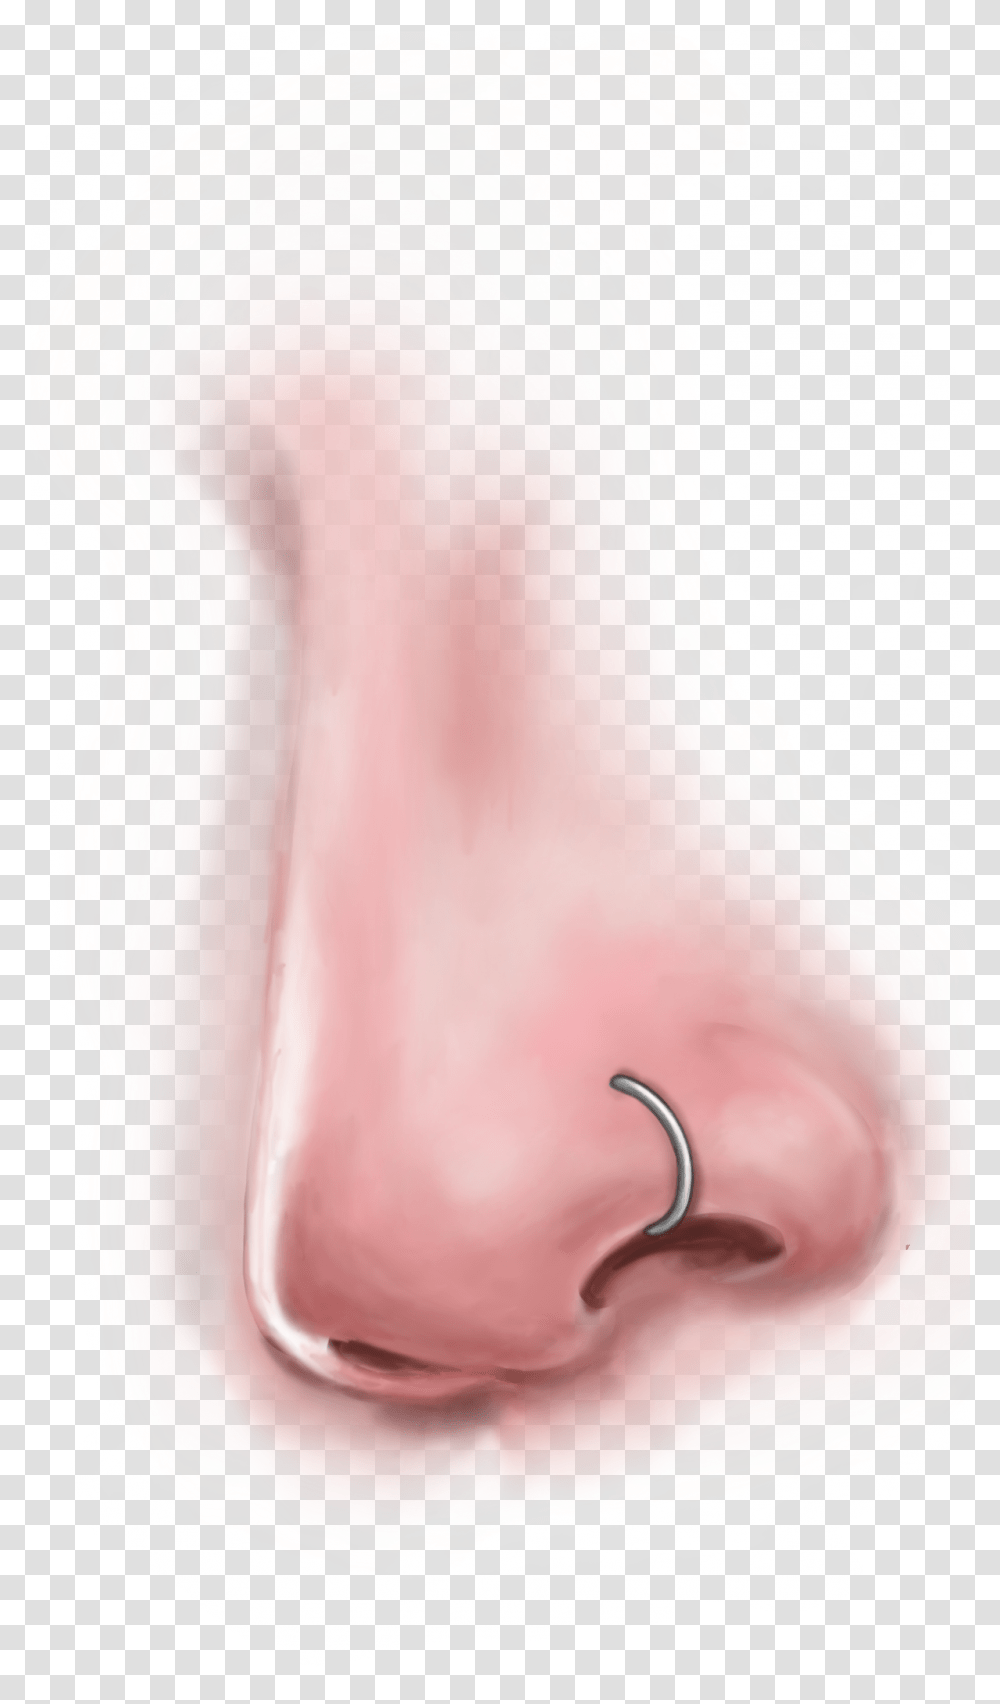 Nose Piercing Pavilion Earrings, Person, Human, Hook, Hand Transparent Png